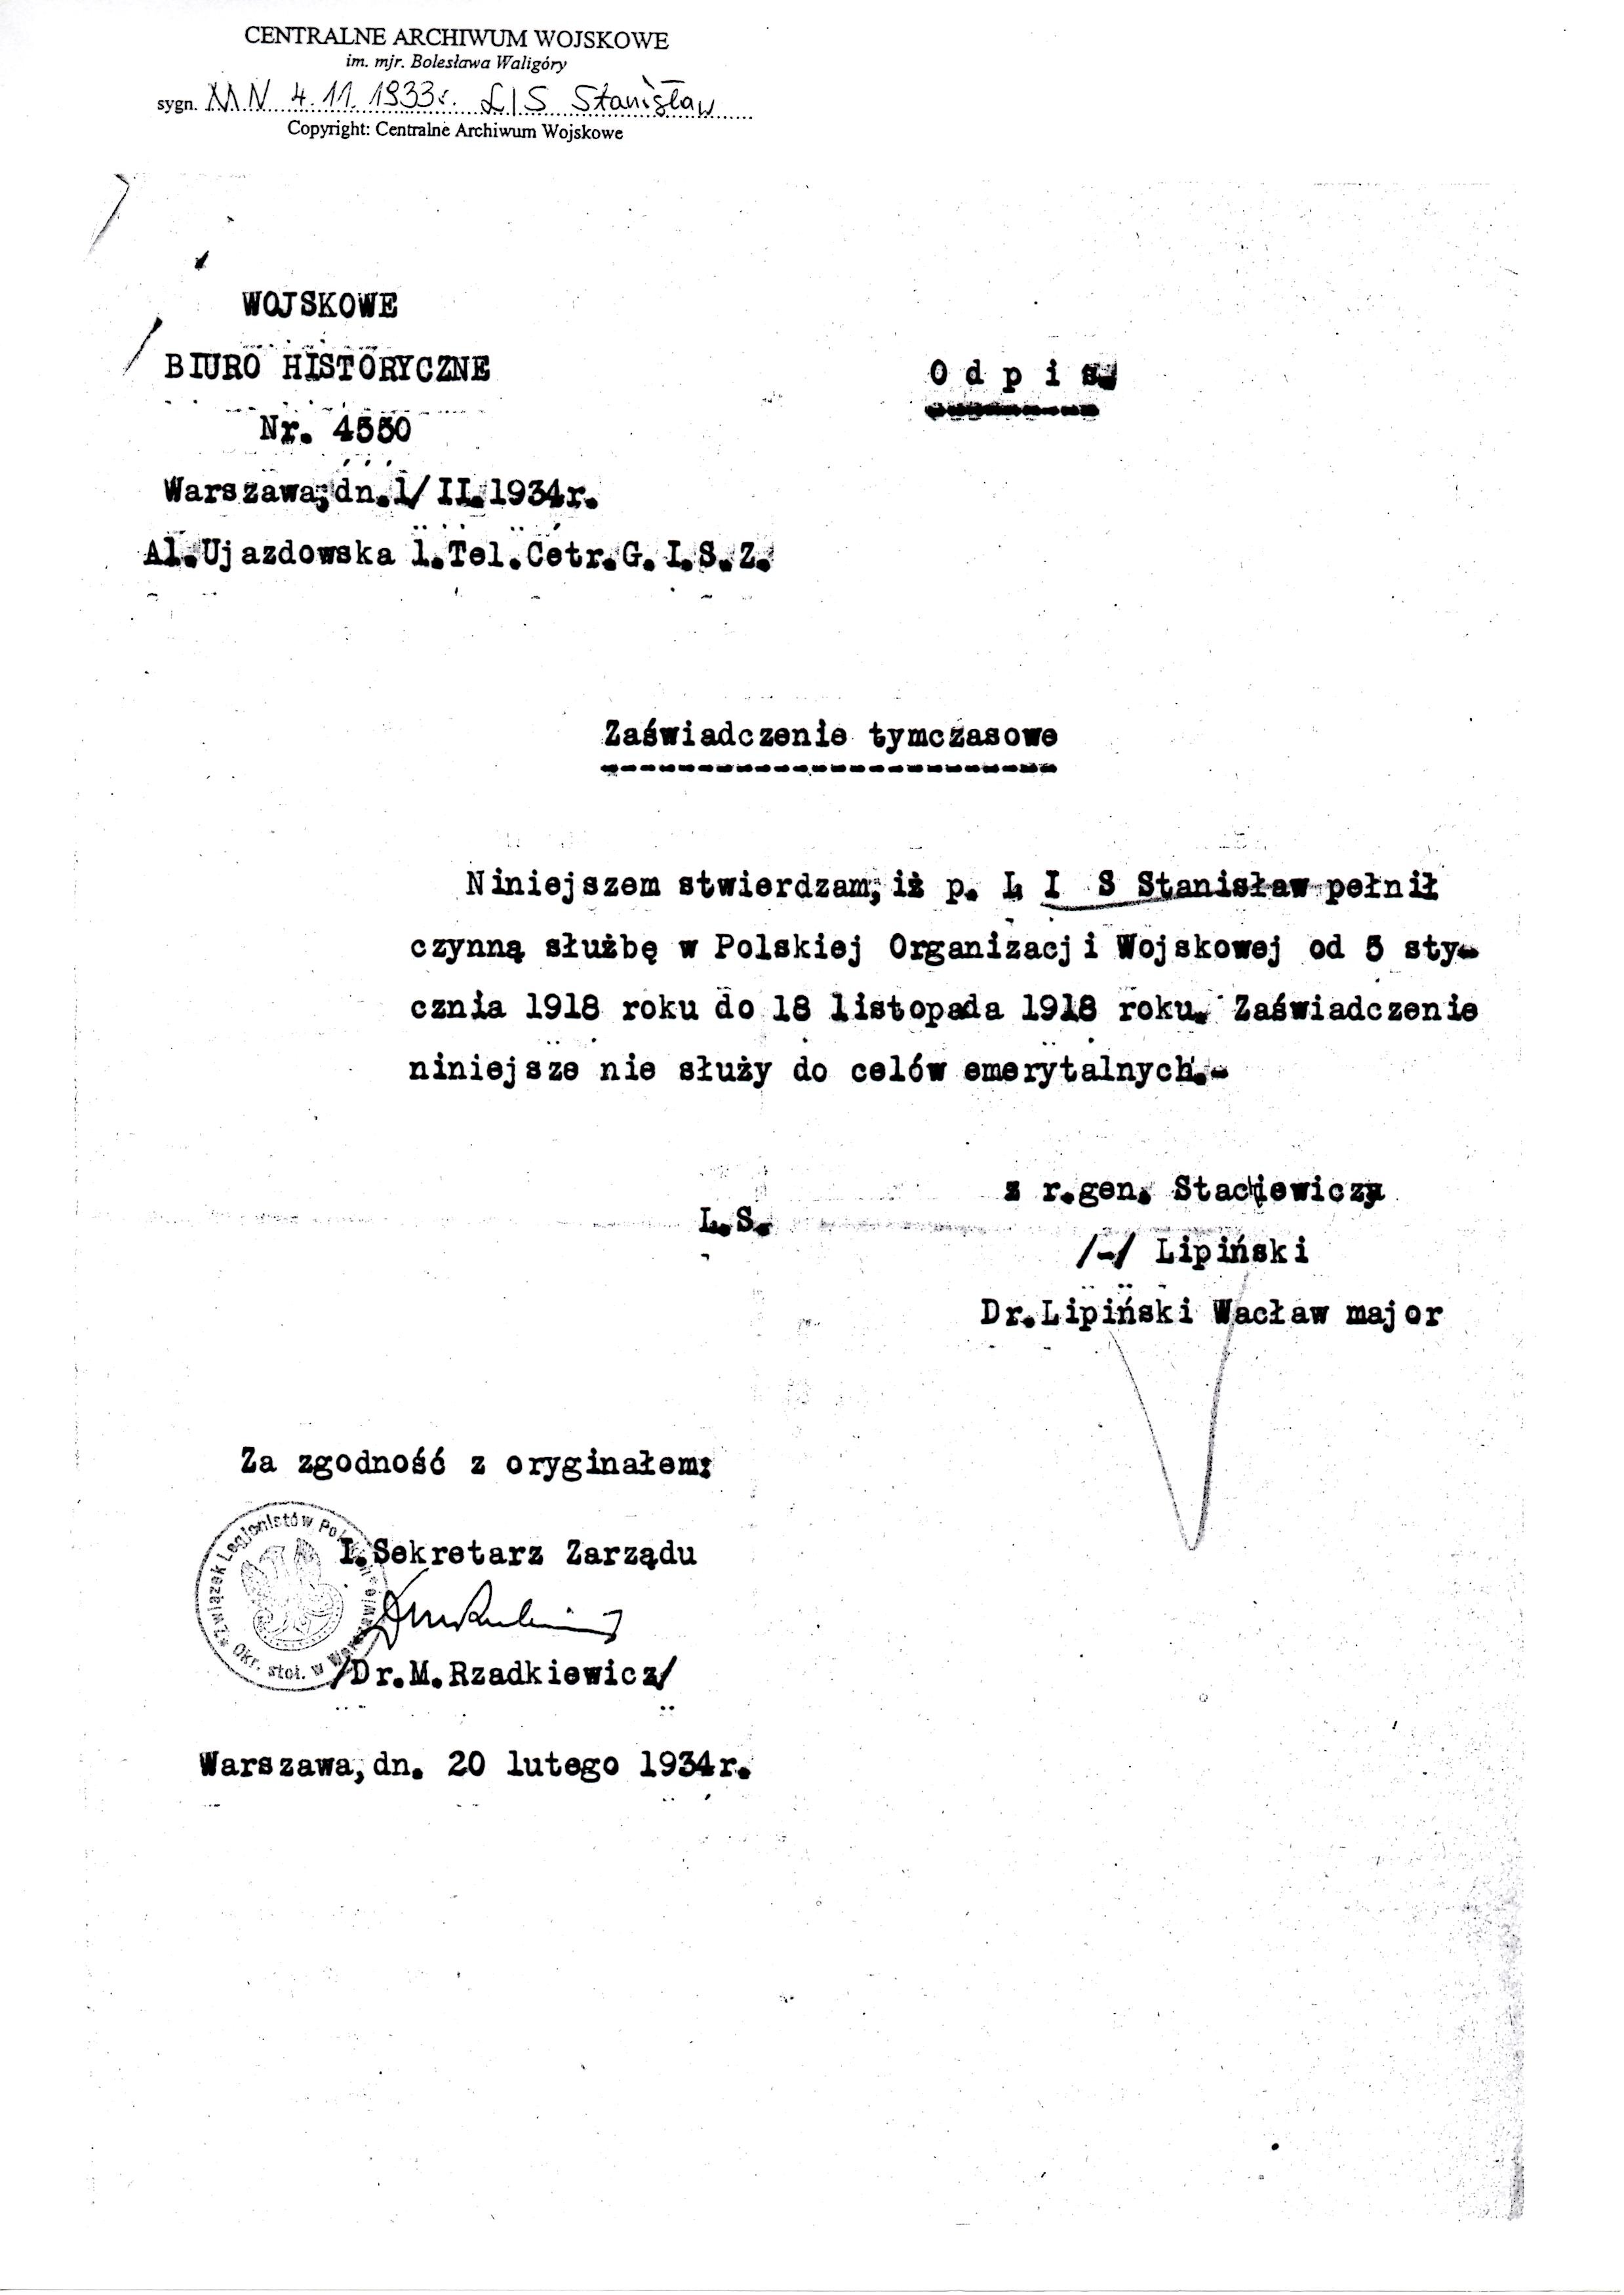 Stanislaw lis temporary Certificate 4 1934.jpg